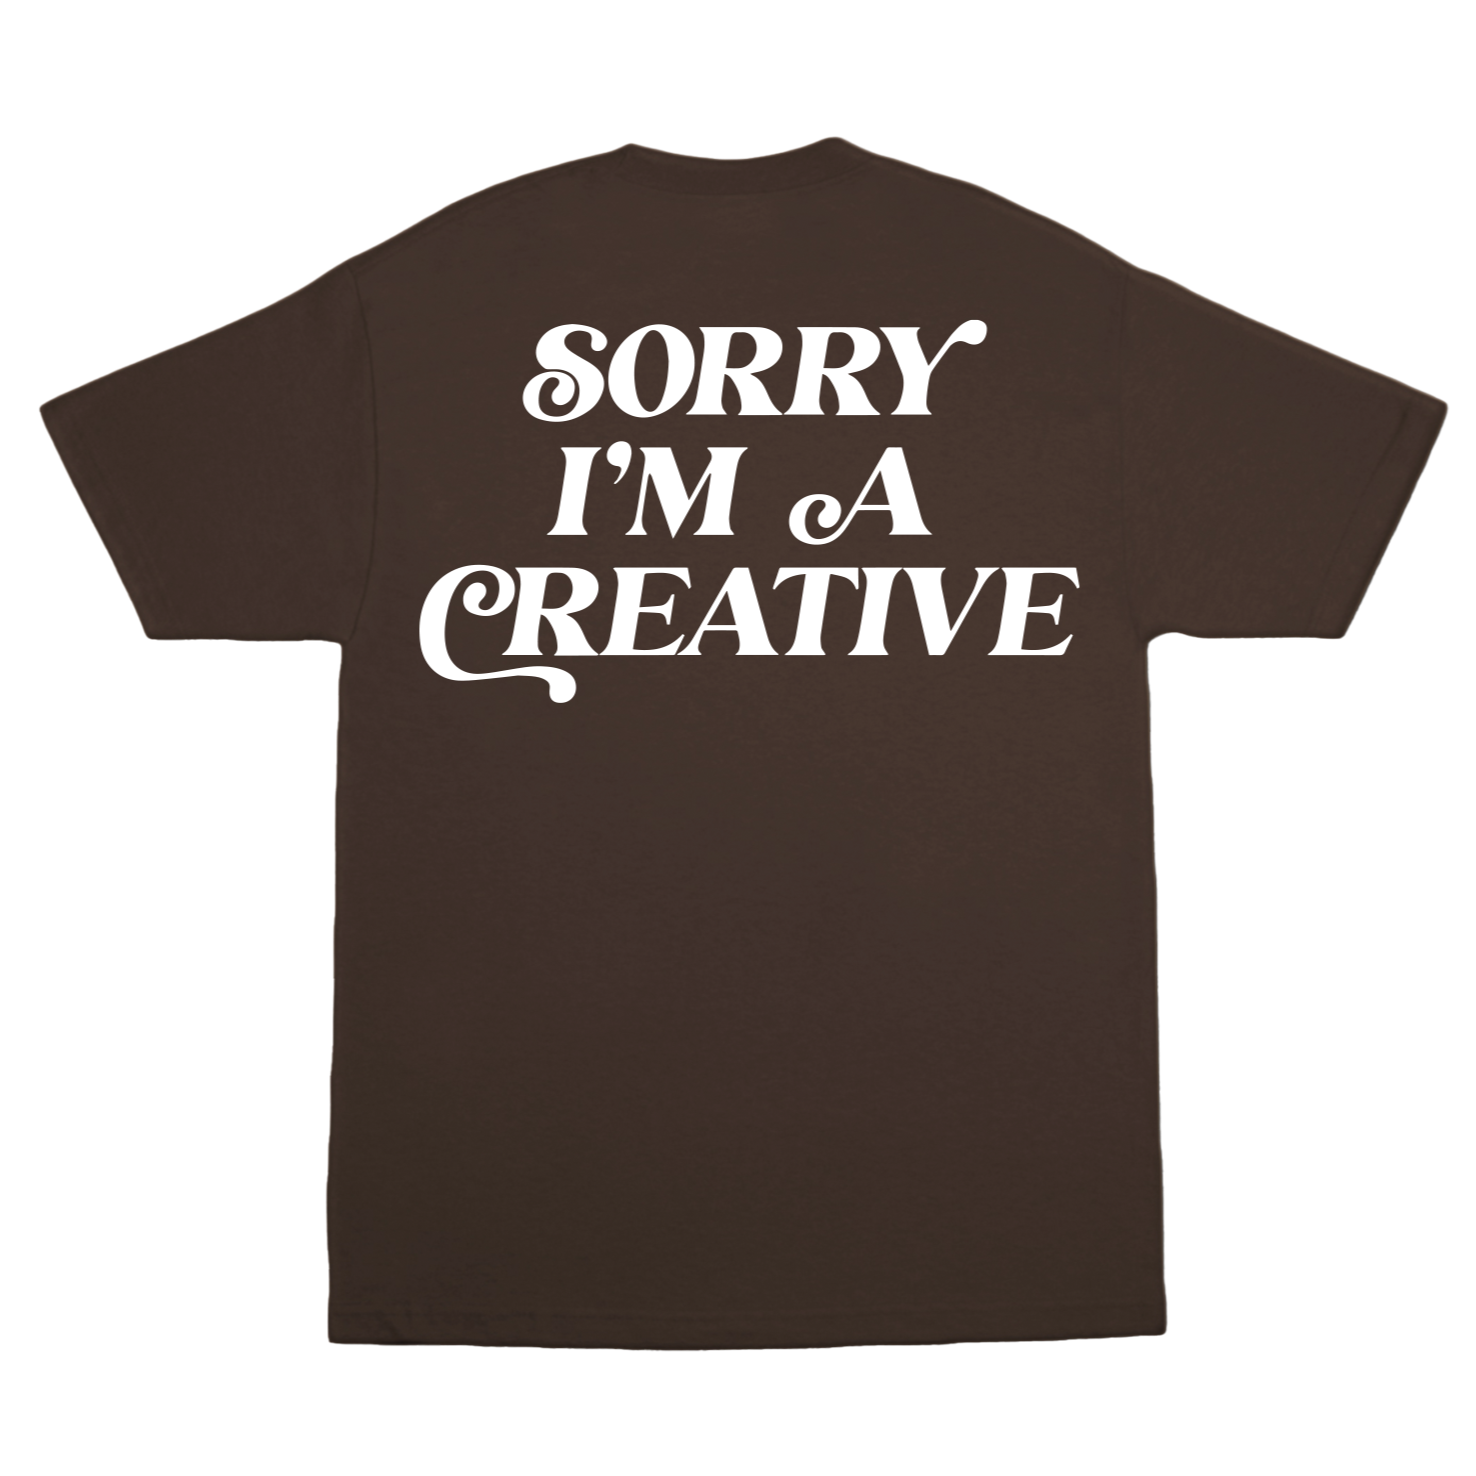 Sorry I'm A Creative - T-Shirt (Brown)